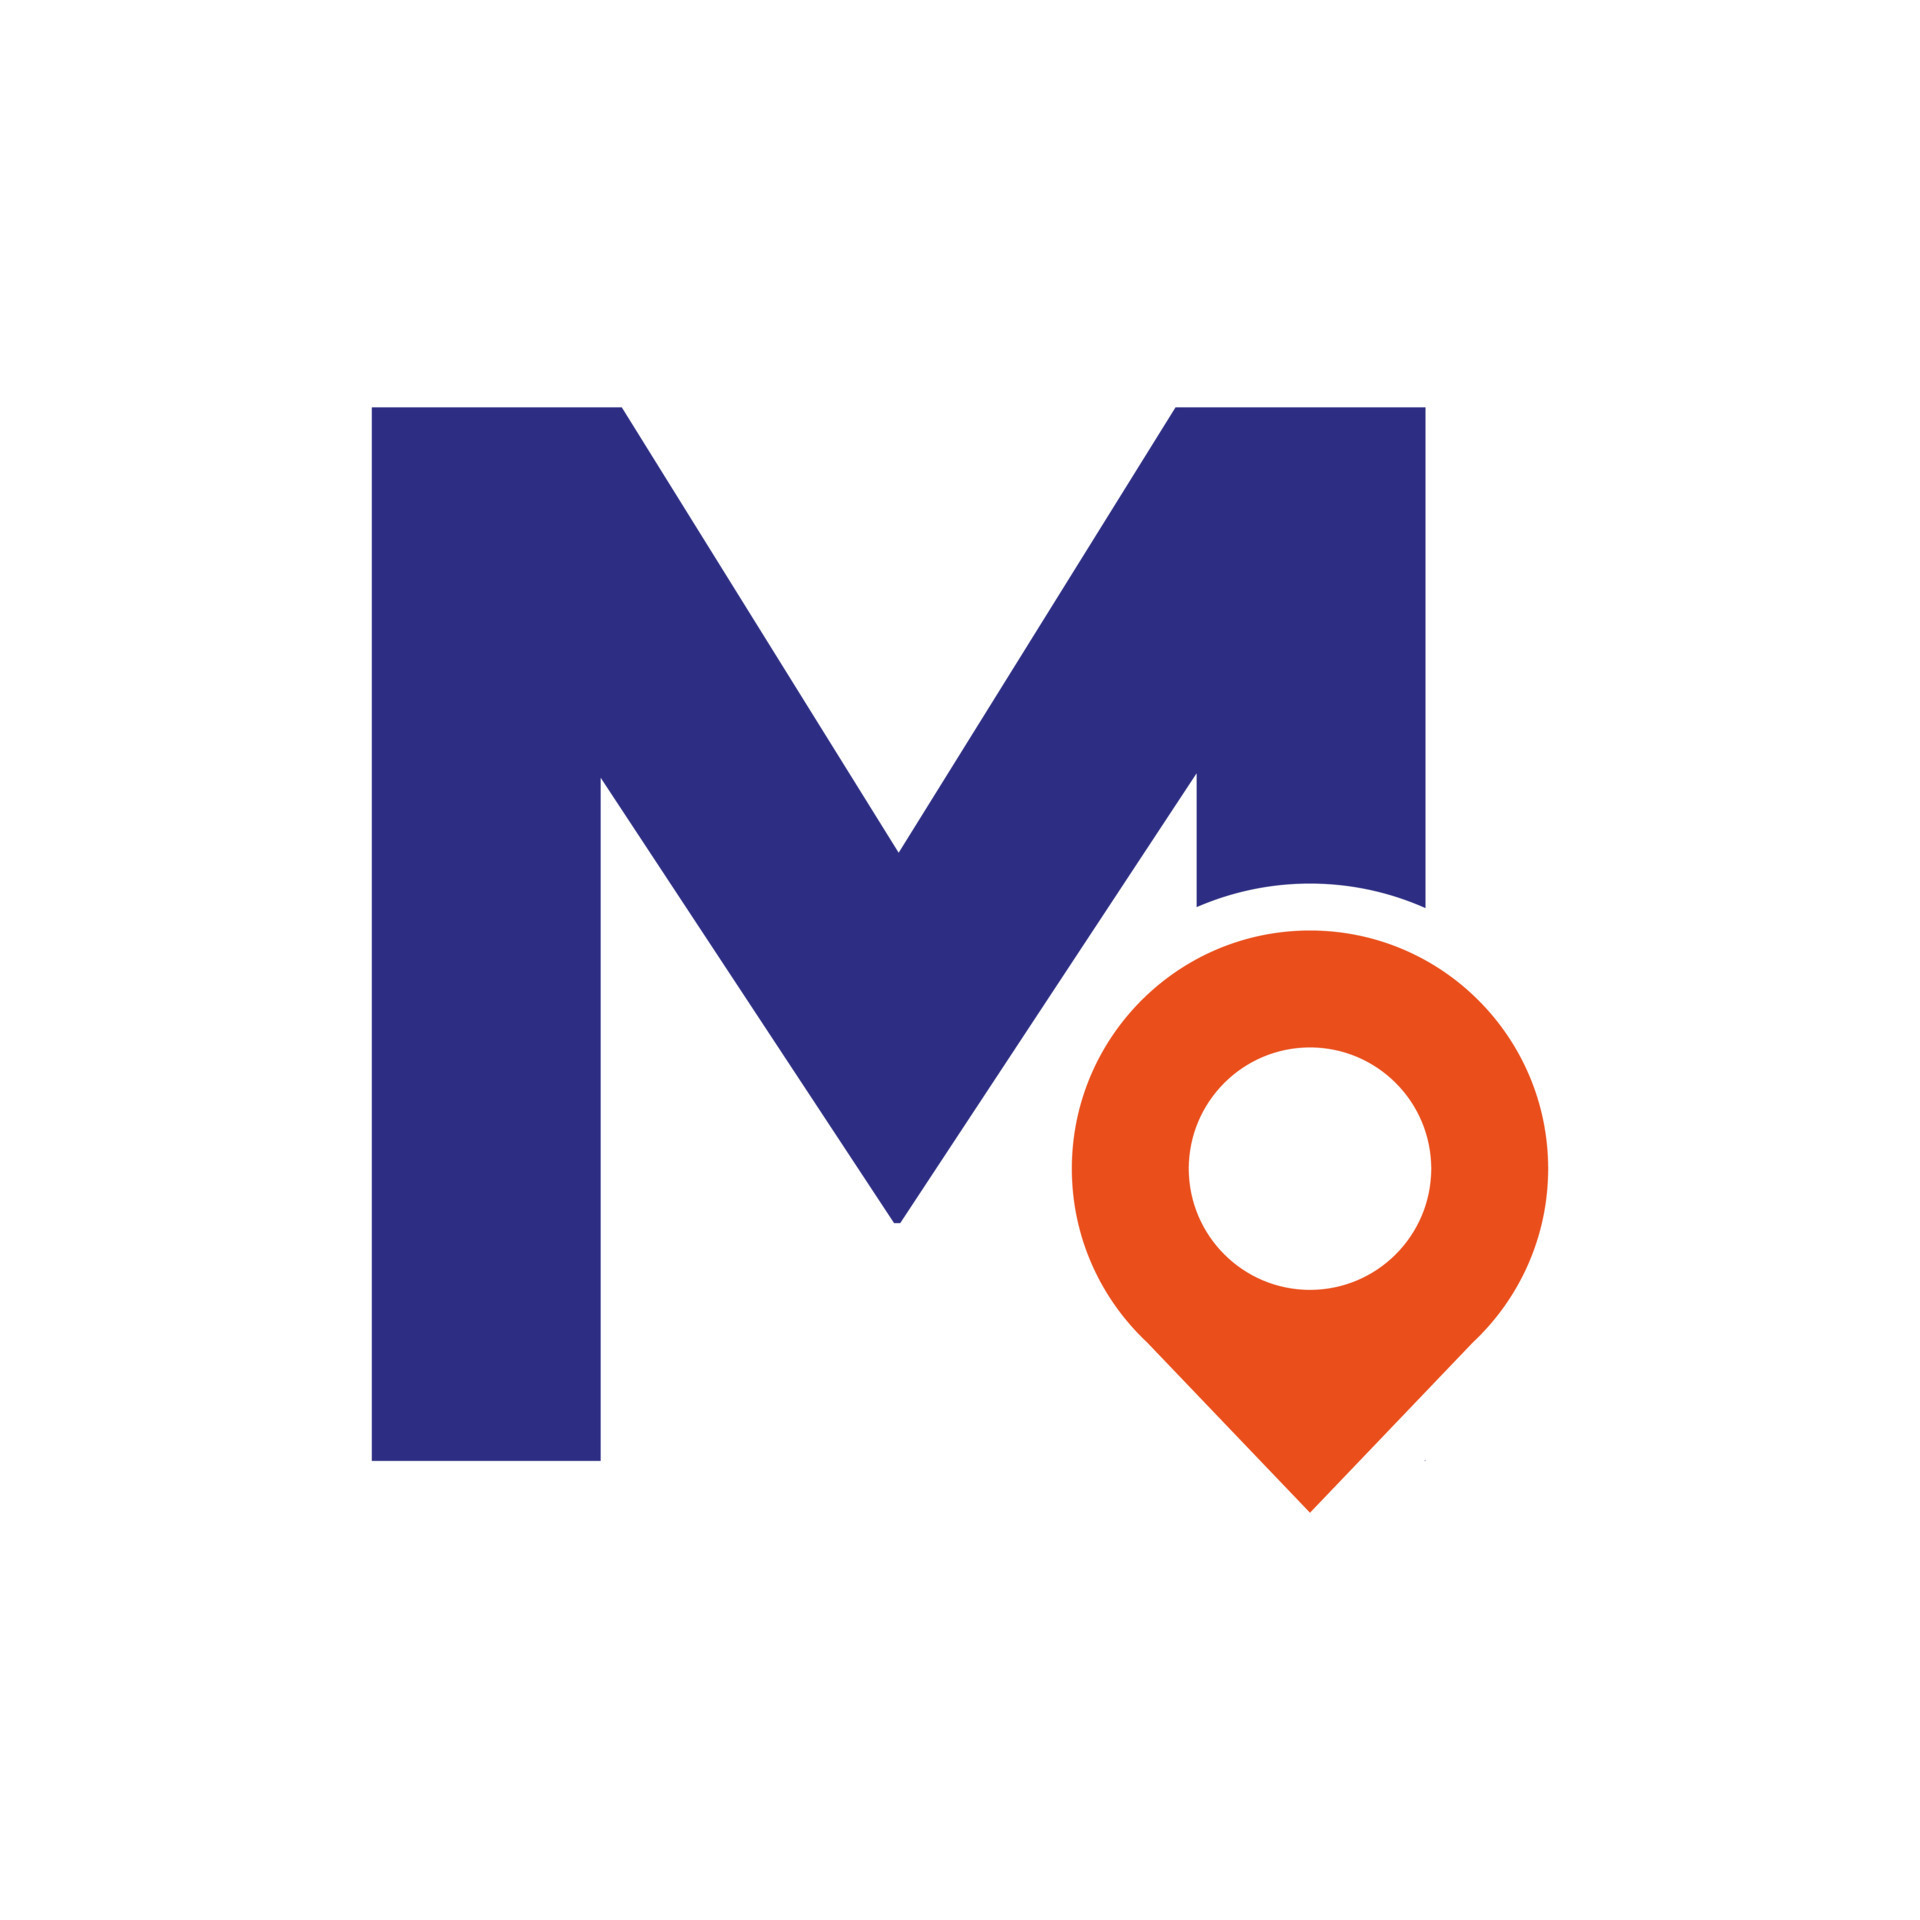 M letter logo design, M symbol, icon, letter Template